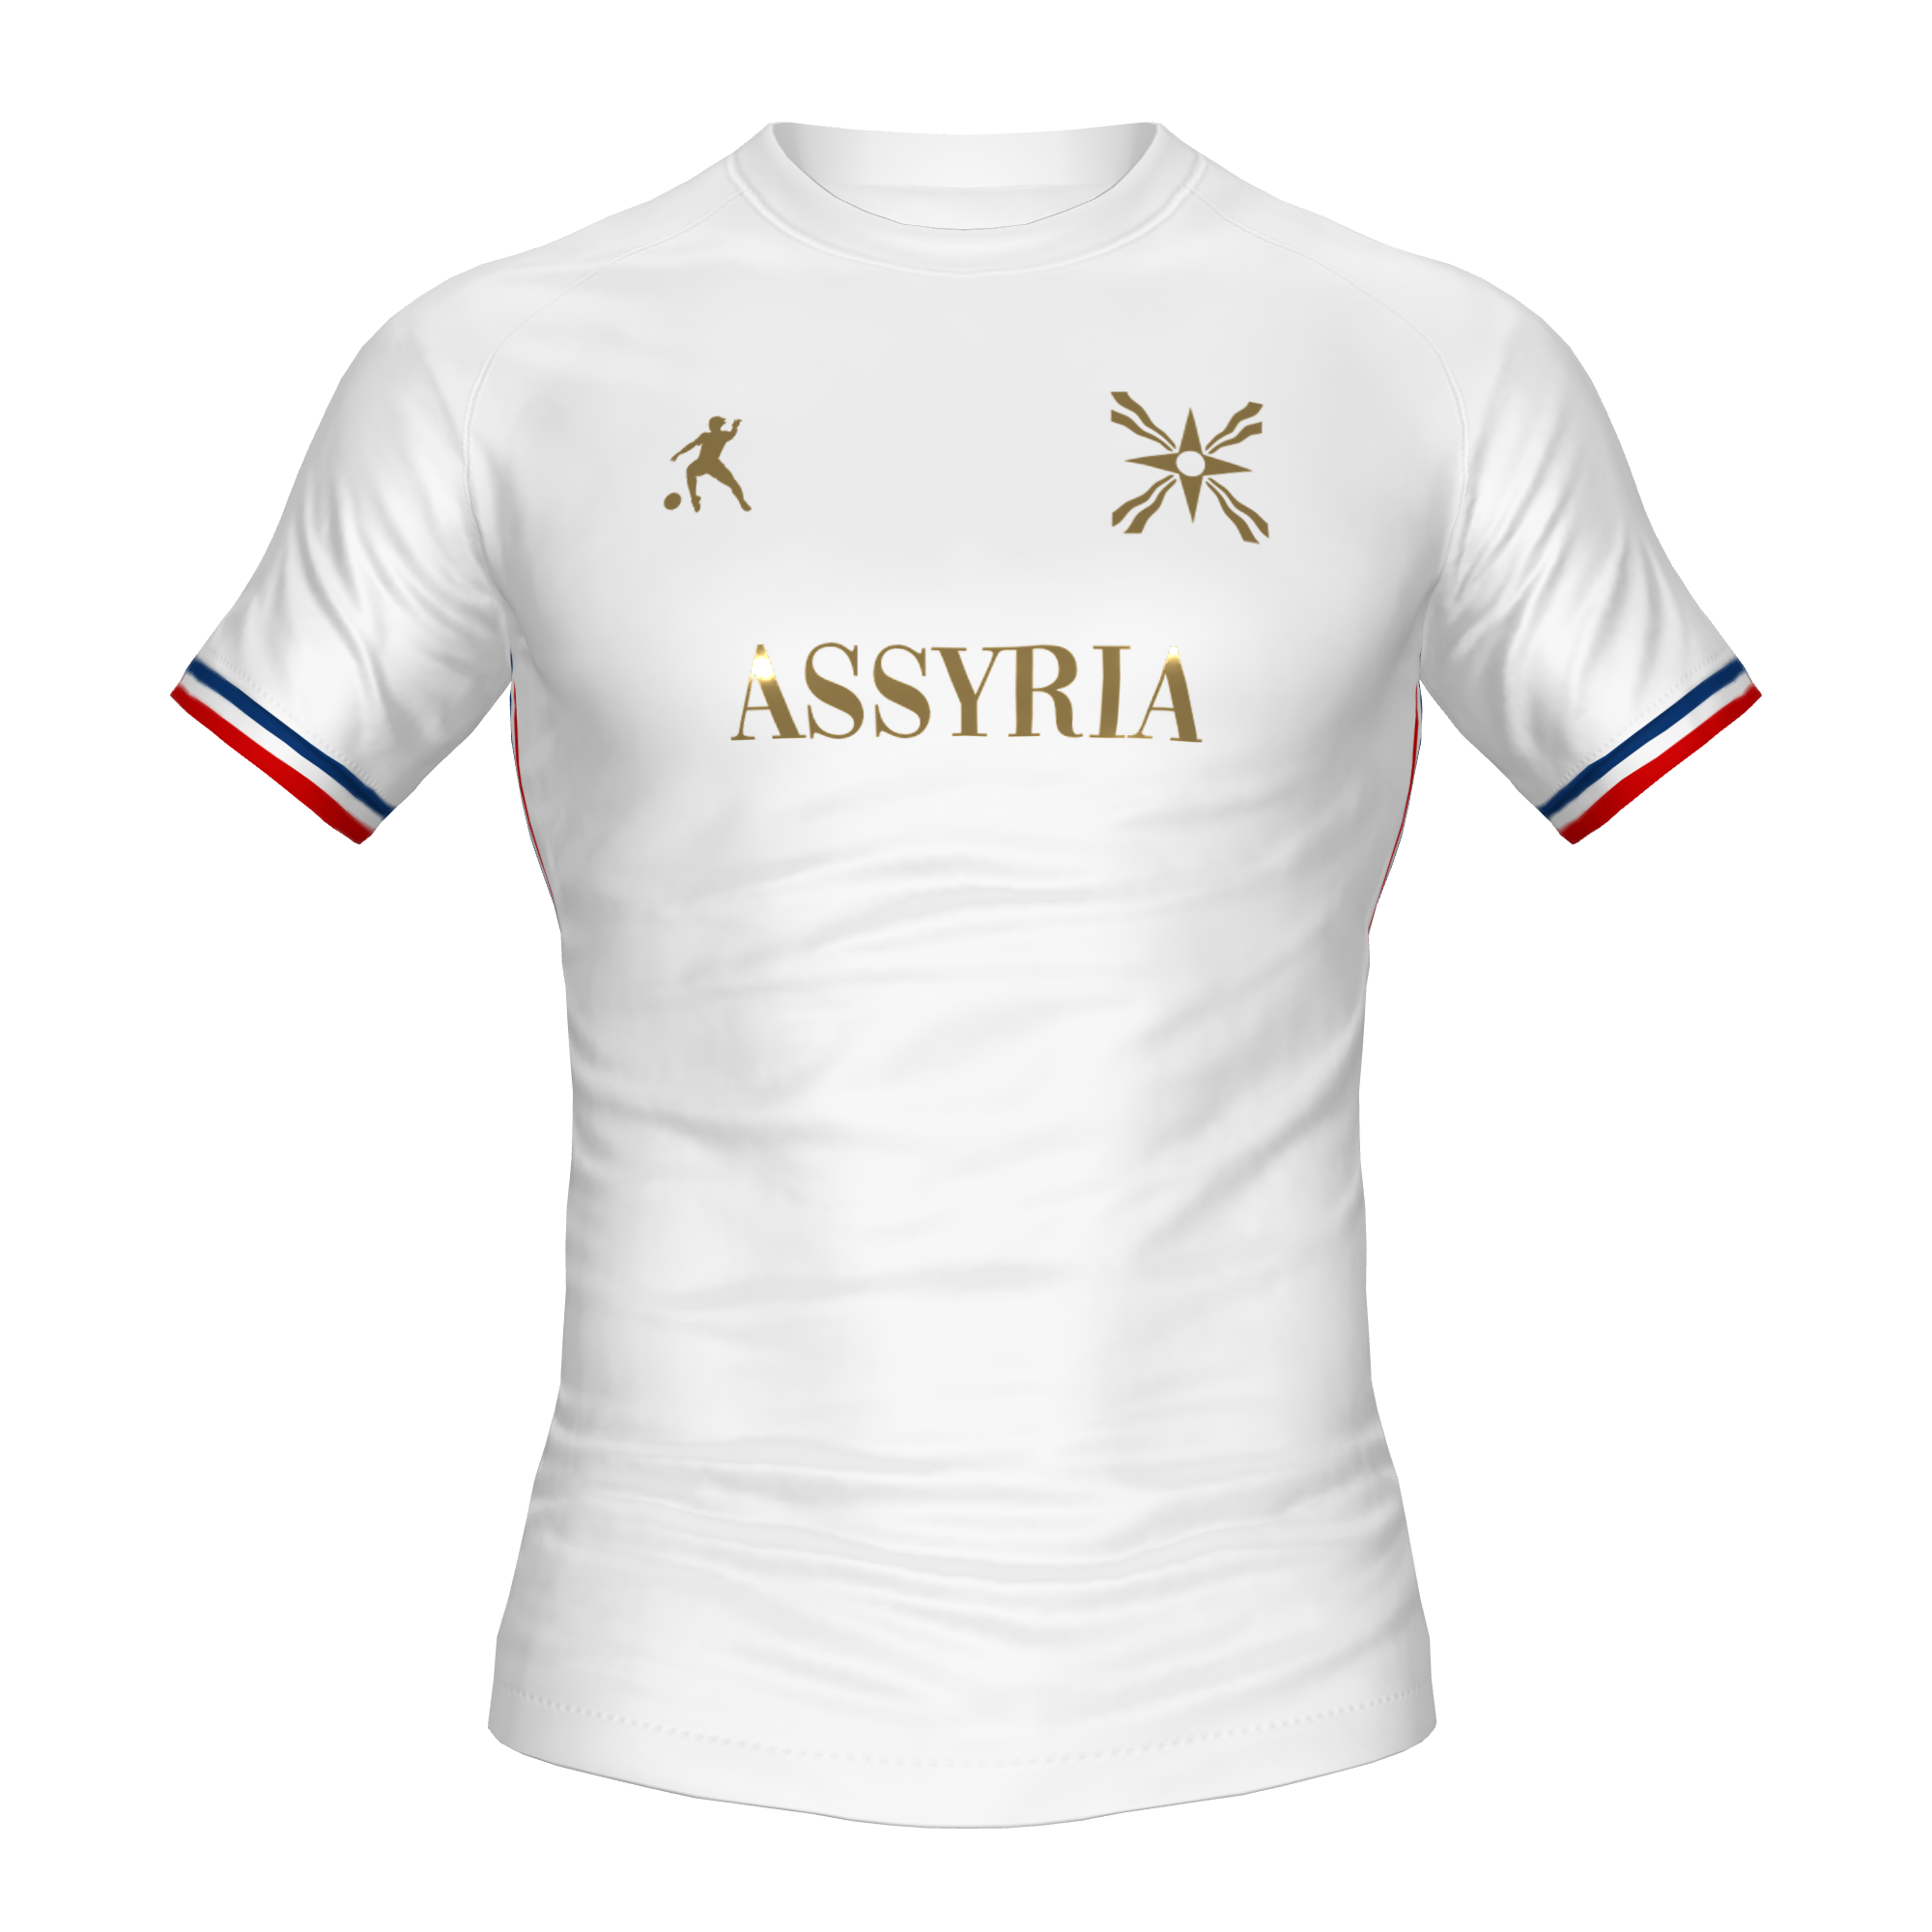 ASSYRIA FOOTBALL SHIRT - LAIB